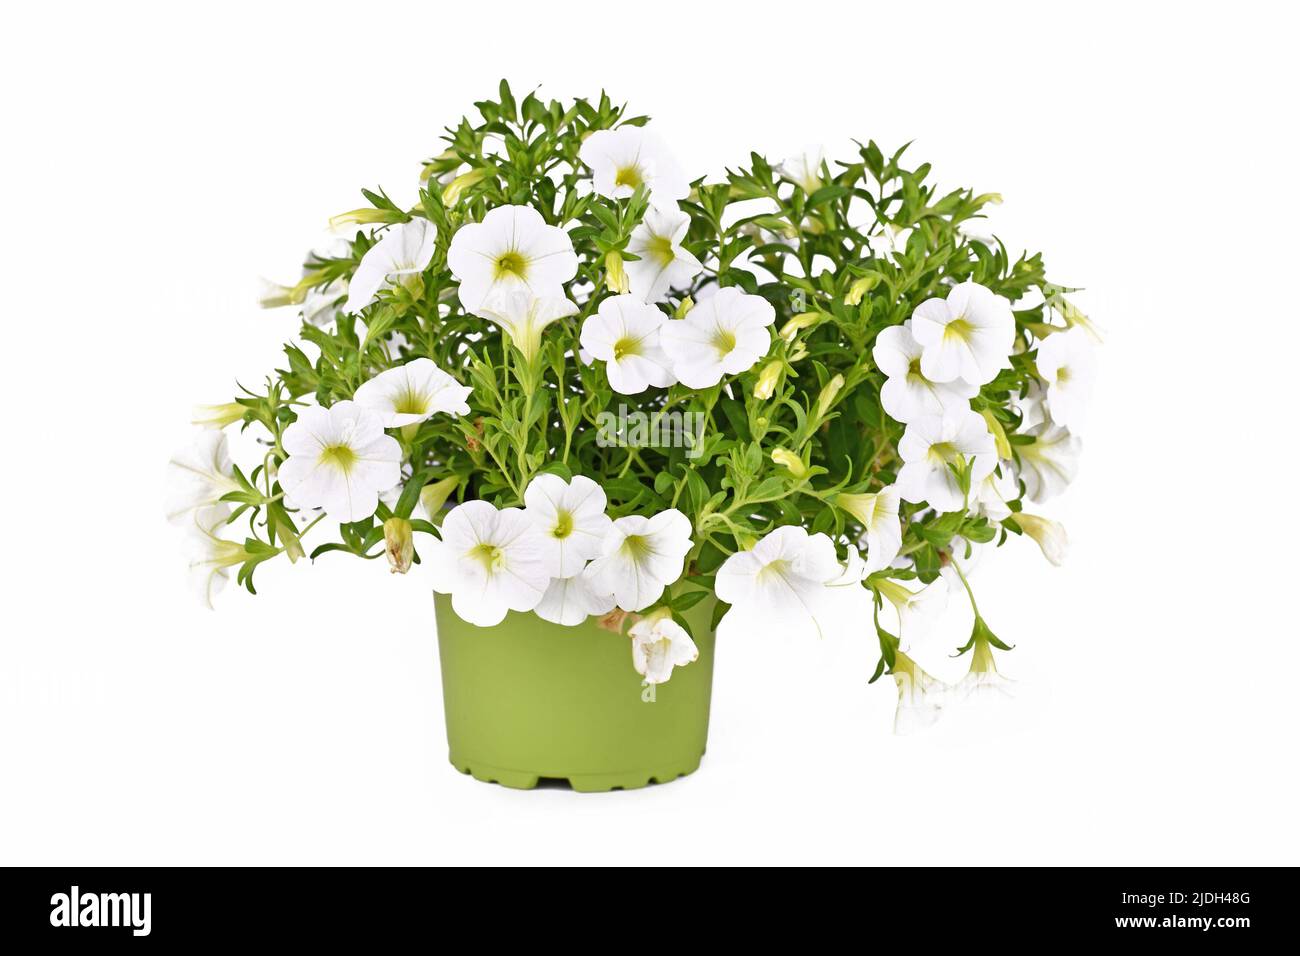 Potted Calibrachoa plant with white flowers on white background Stock Photo